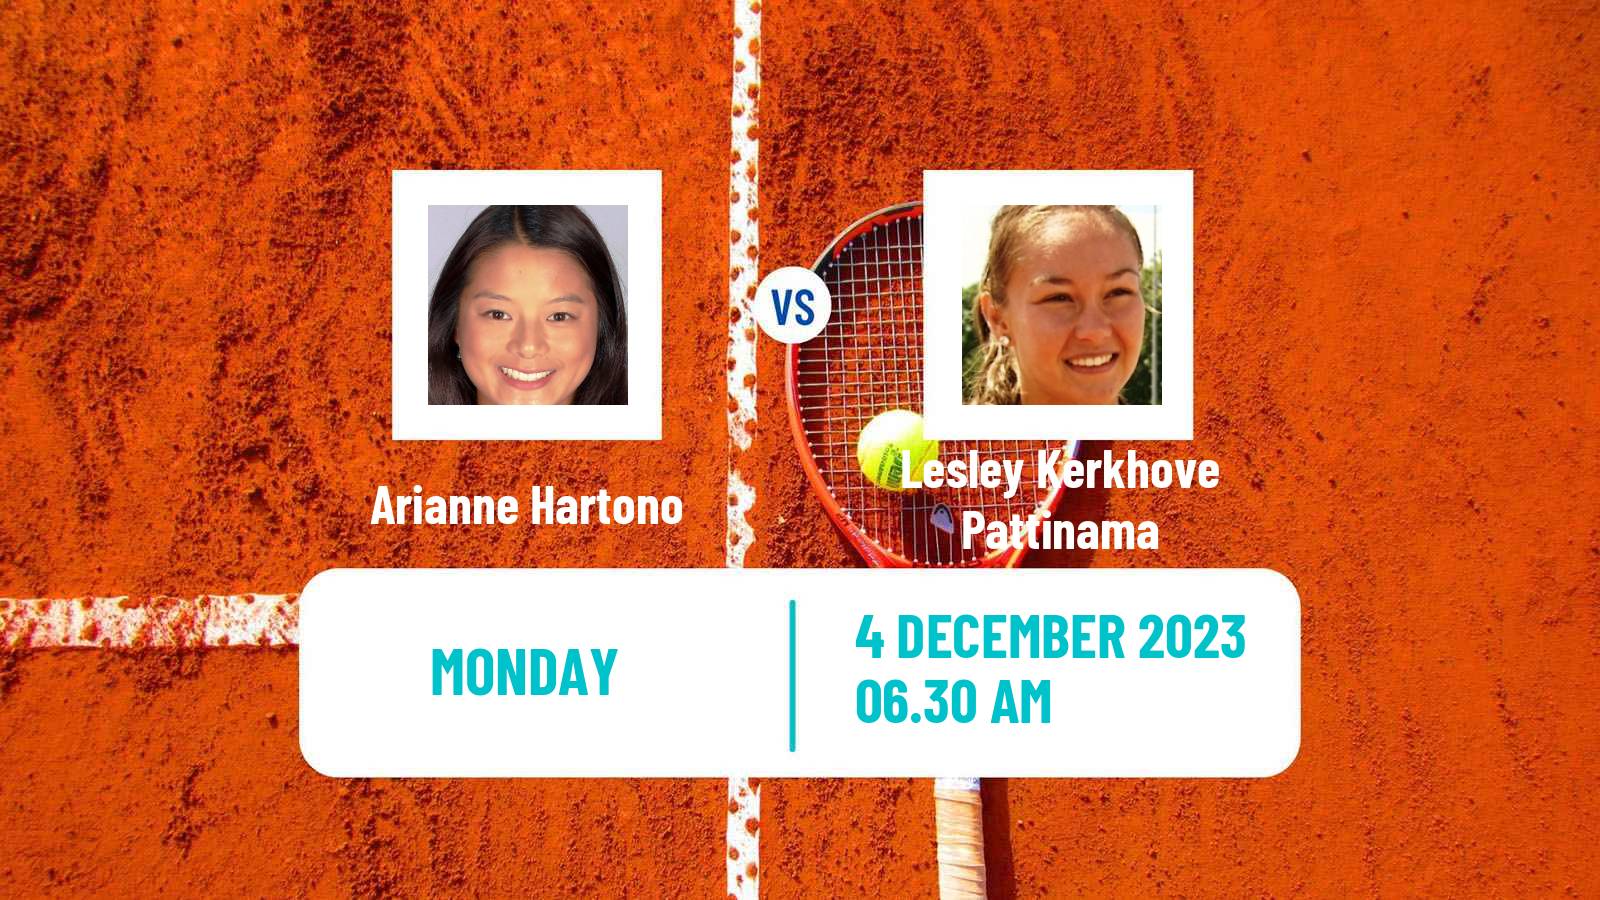 Tennis ITF W100 Dubai Women Arianne Hartono - Lesley Kerkhove Pattinama